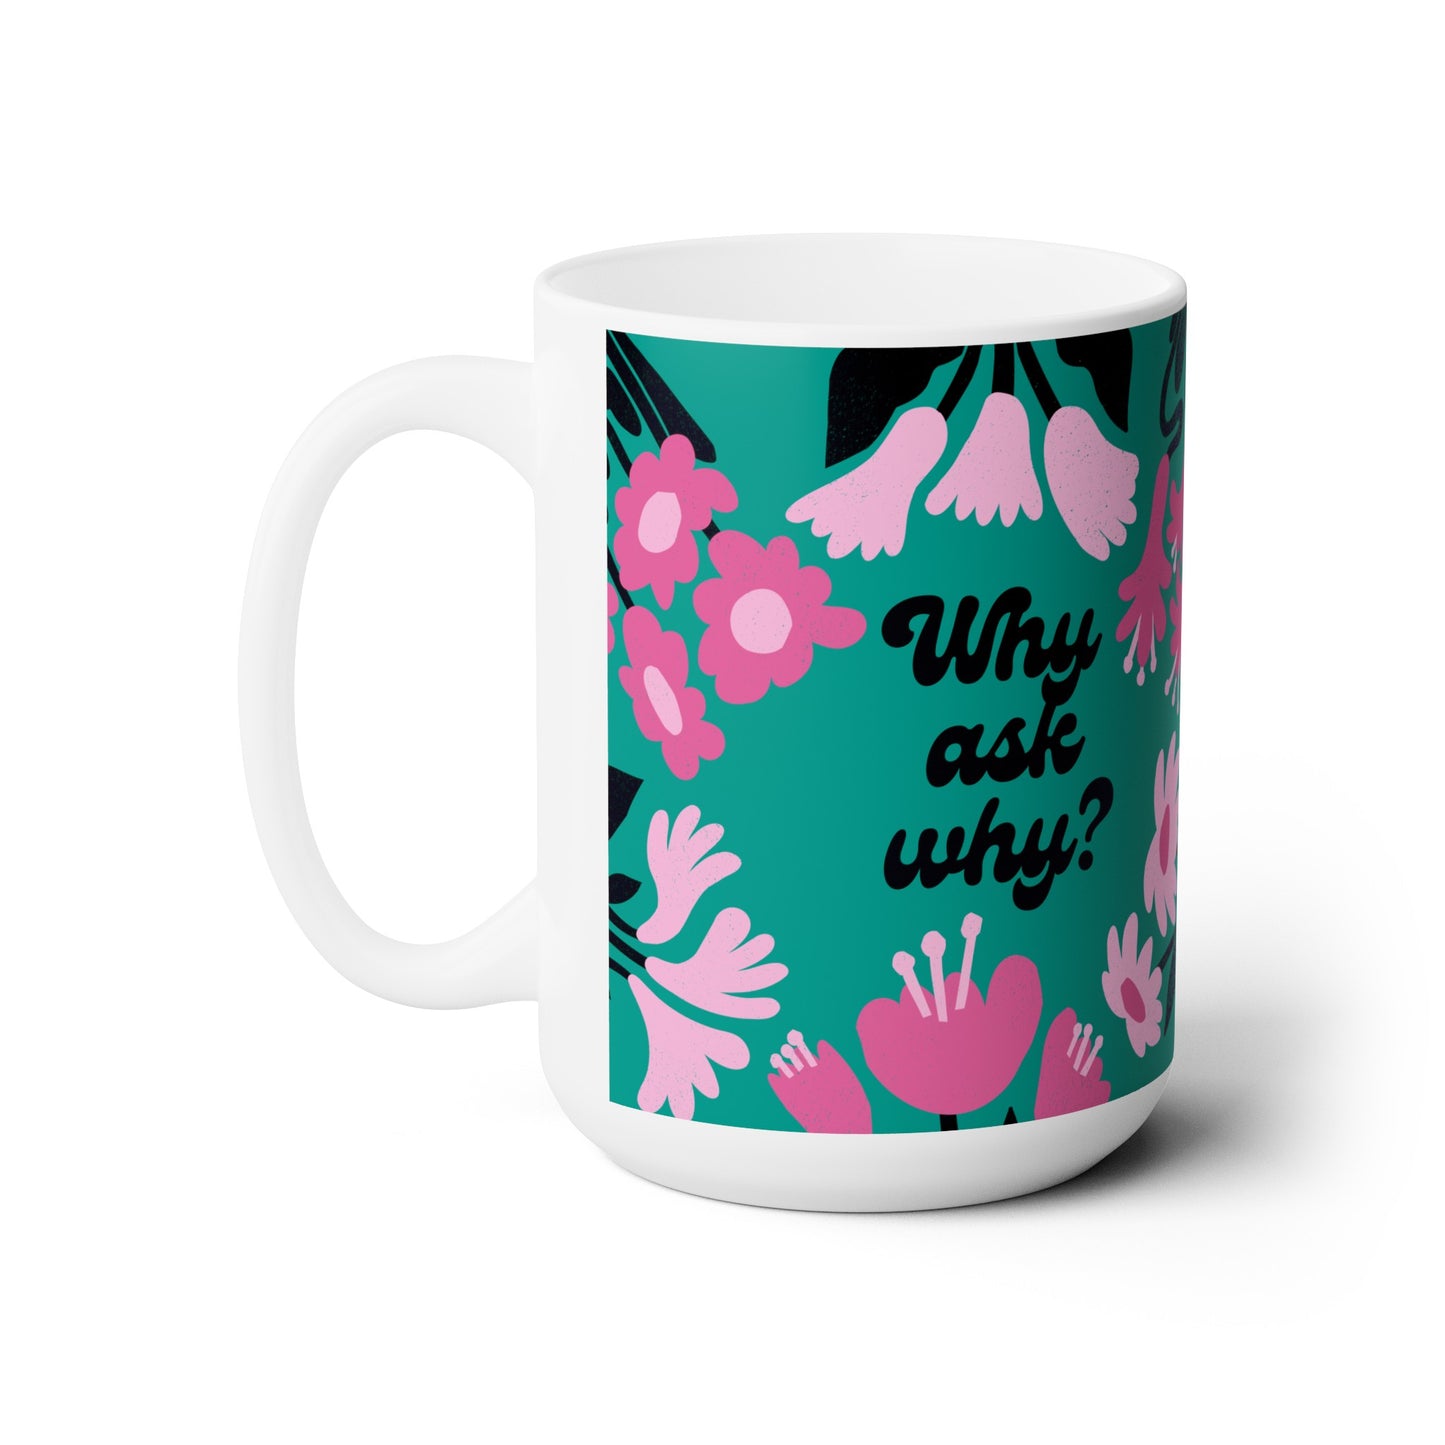 Retro Vibes "Why ask why?" Groovy Flowers Coffee Mug 15oz